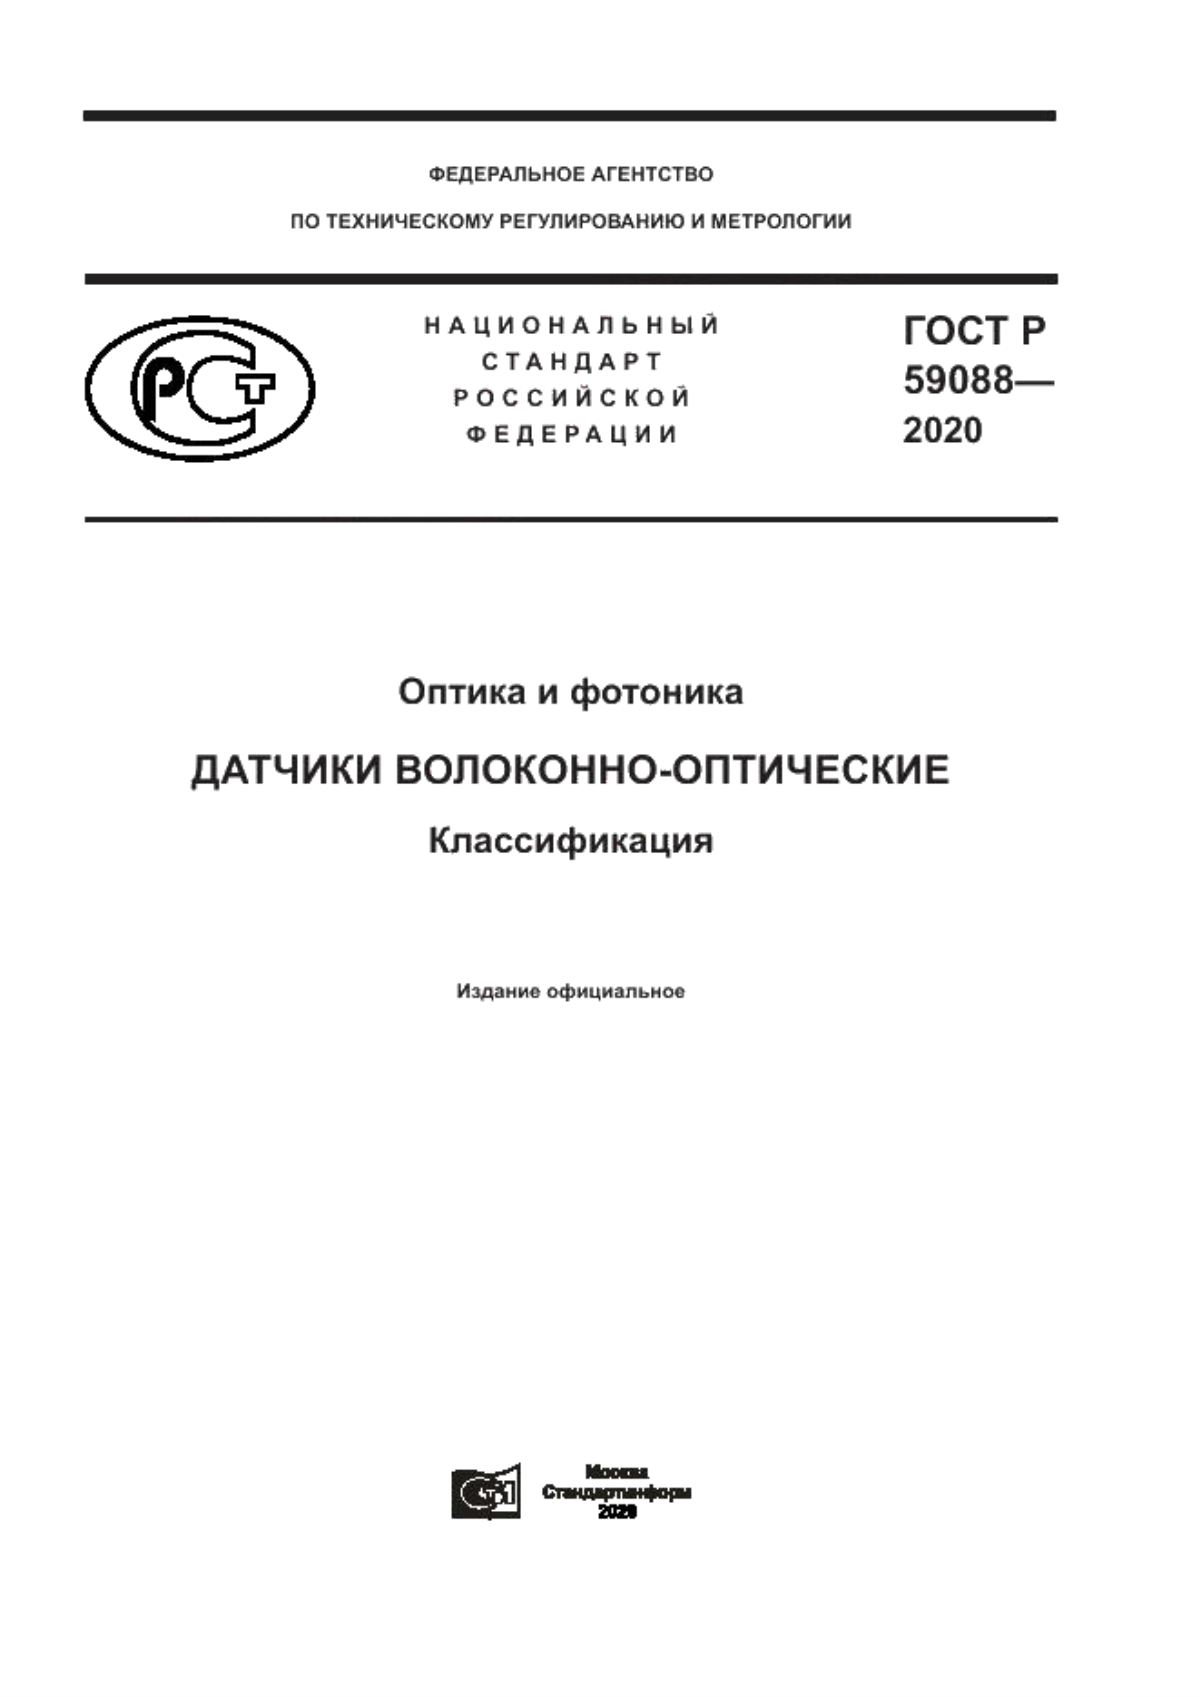 ГОСТ Р 59088-2020 Оптика и фотоника. Датчики волоконно-оптические. Классификация